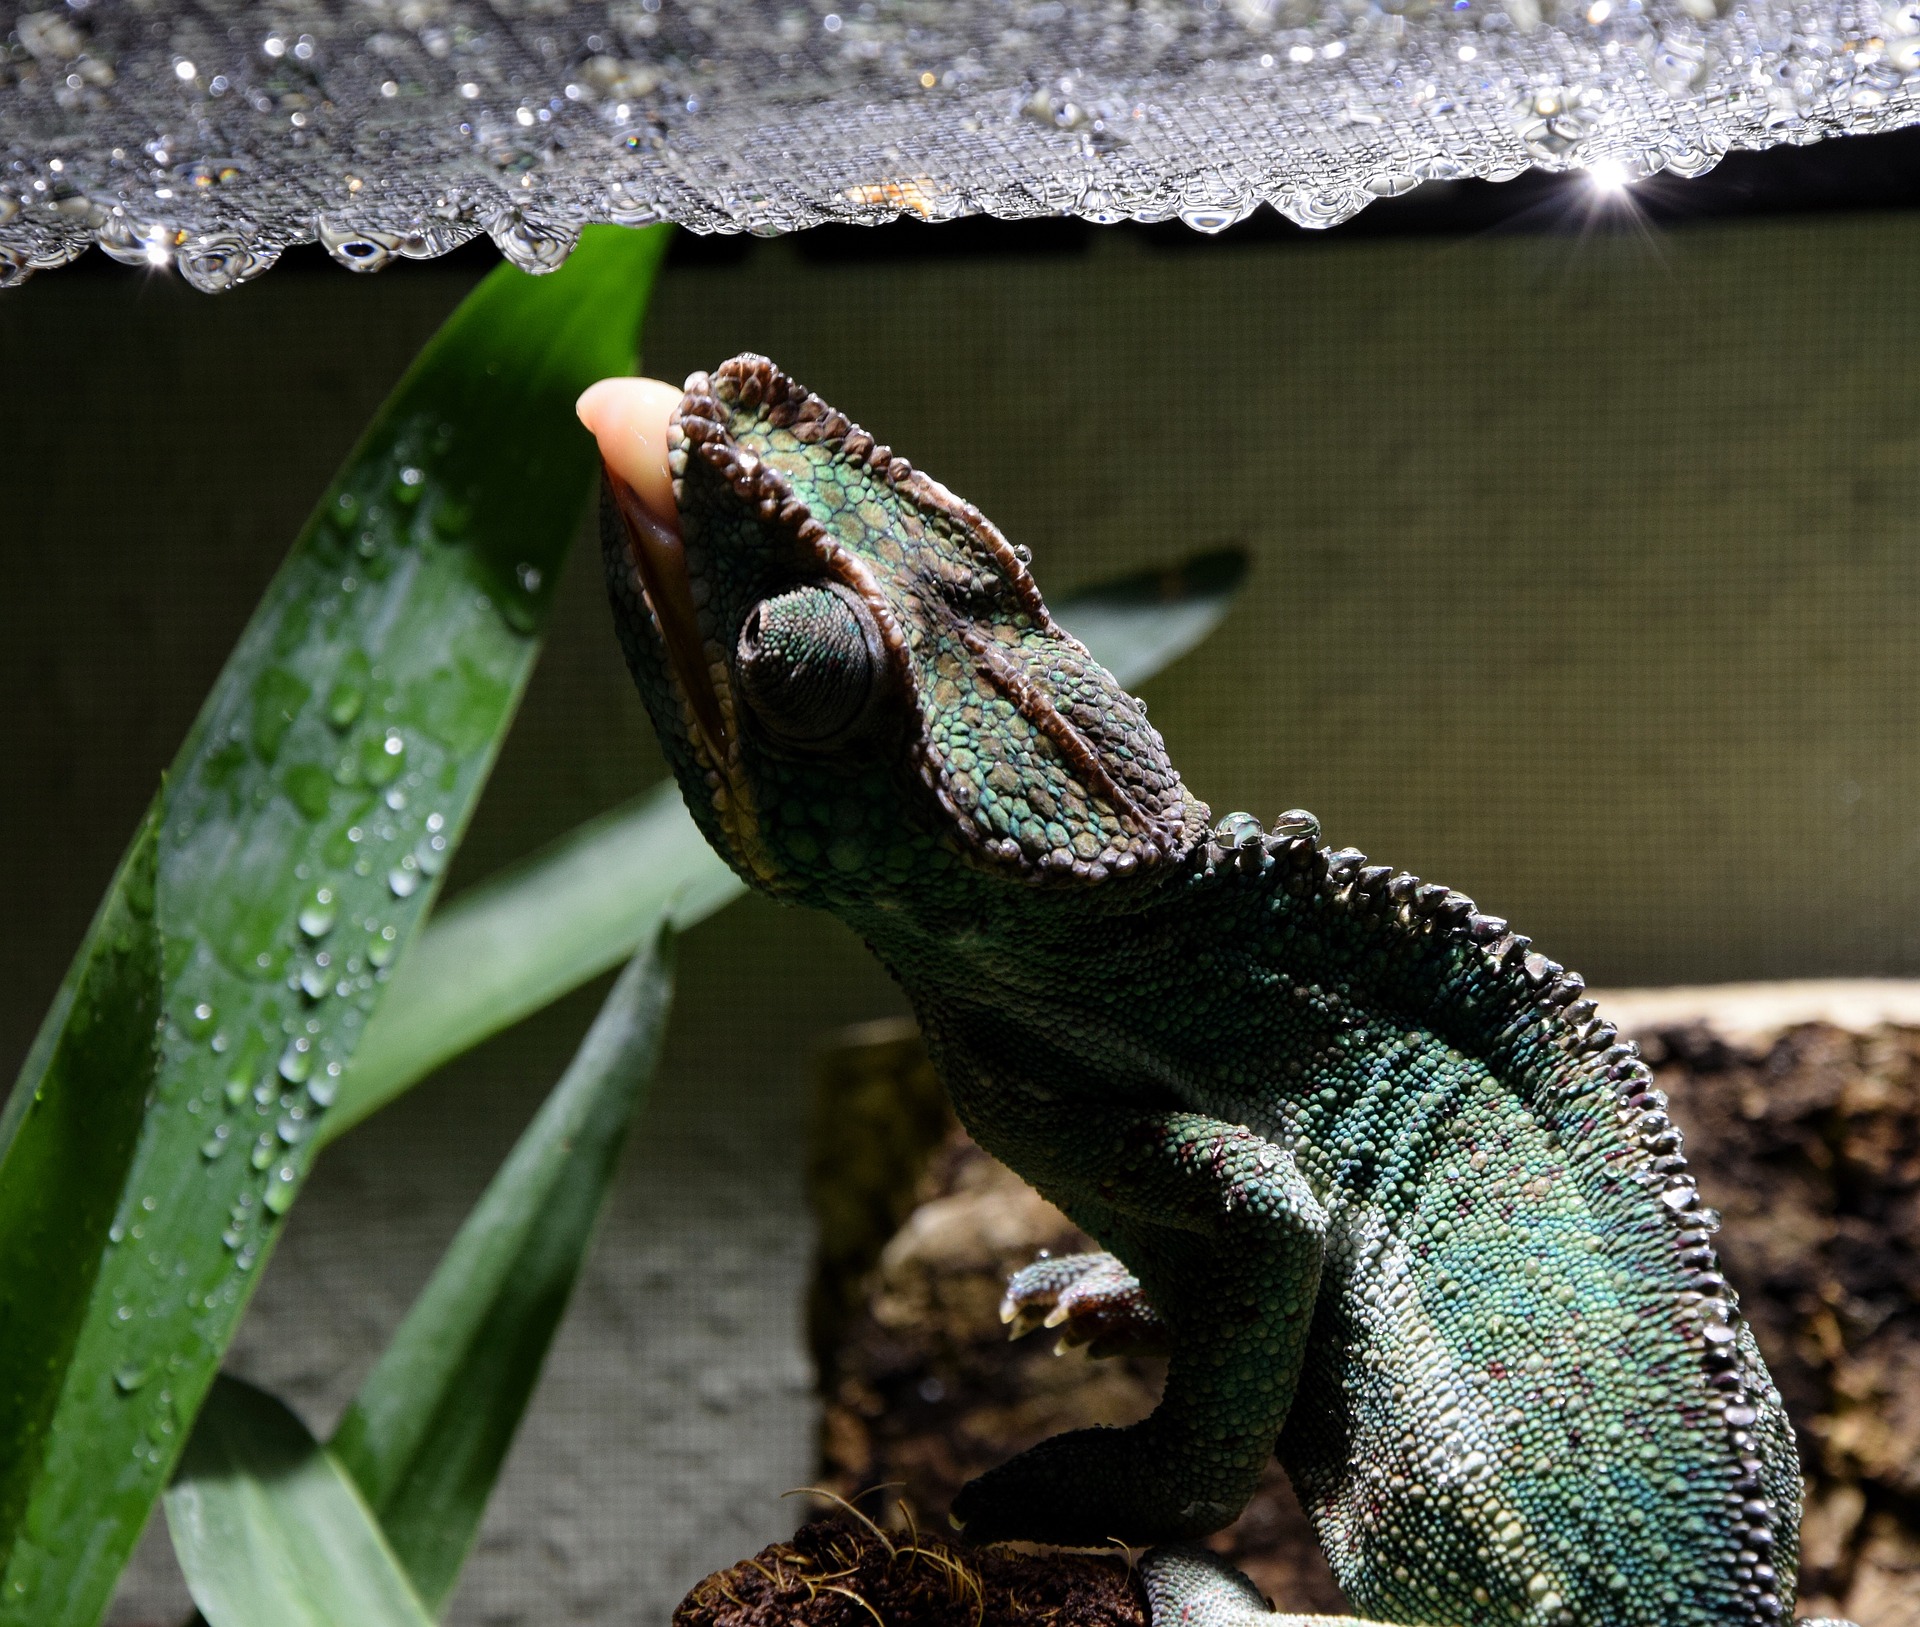 Chameleon licking water droplets